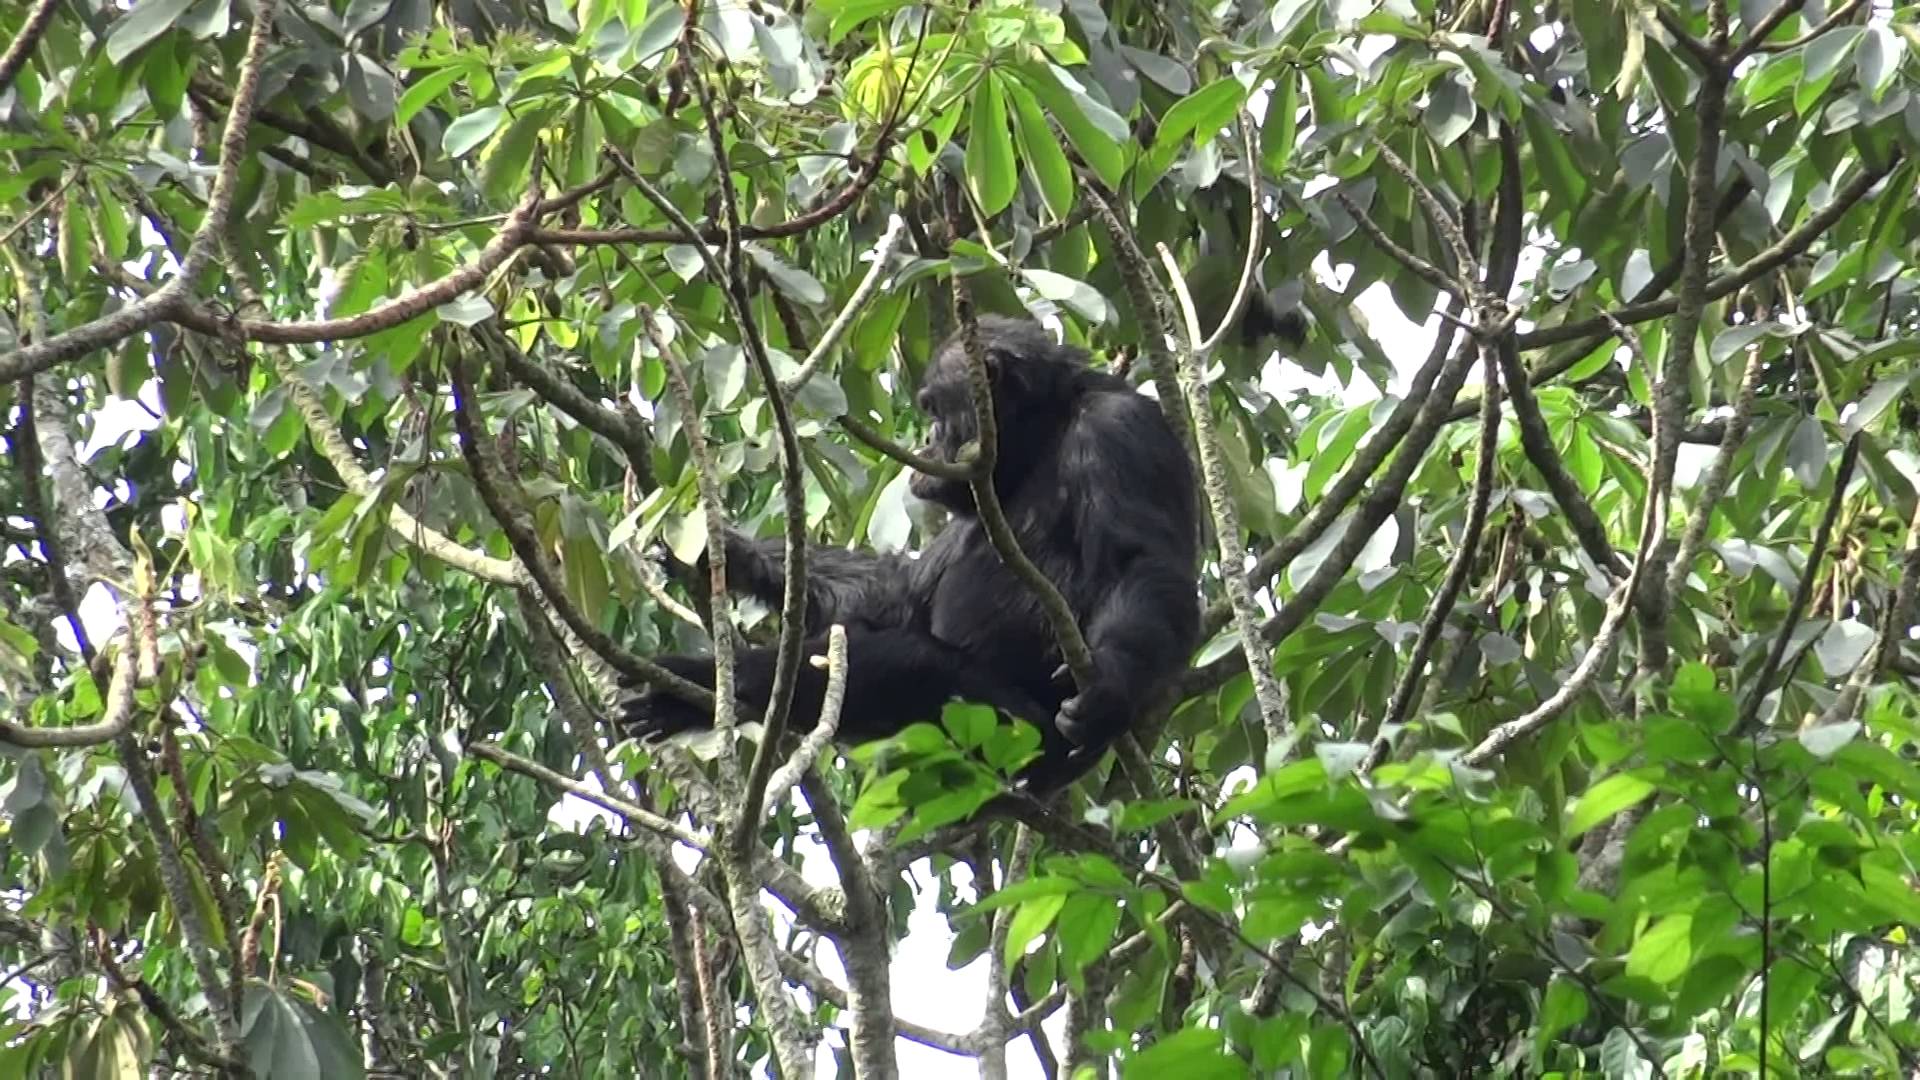 Chimpanzee Tracking in the Kyambura Gorge